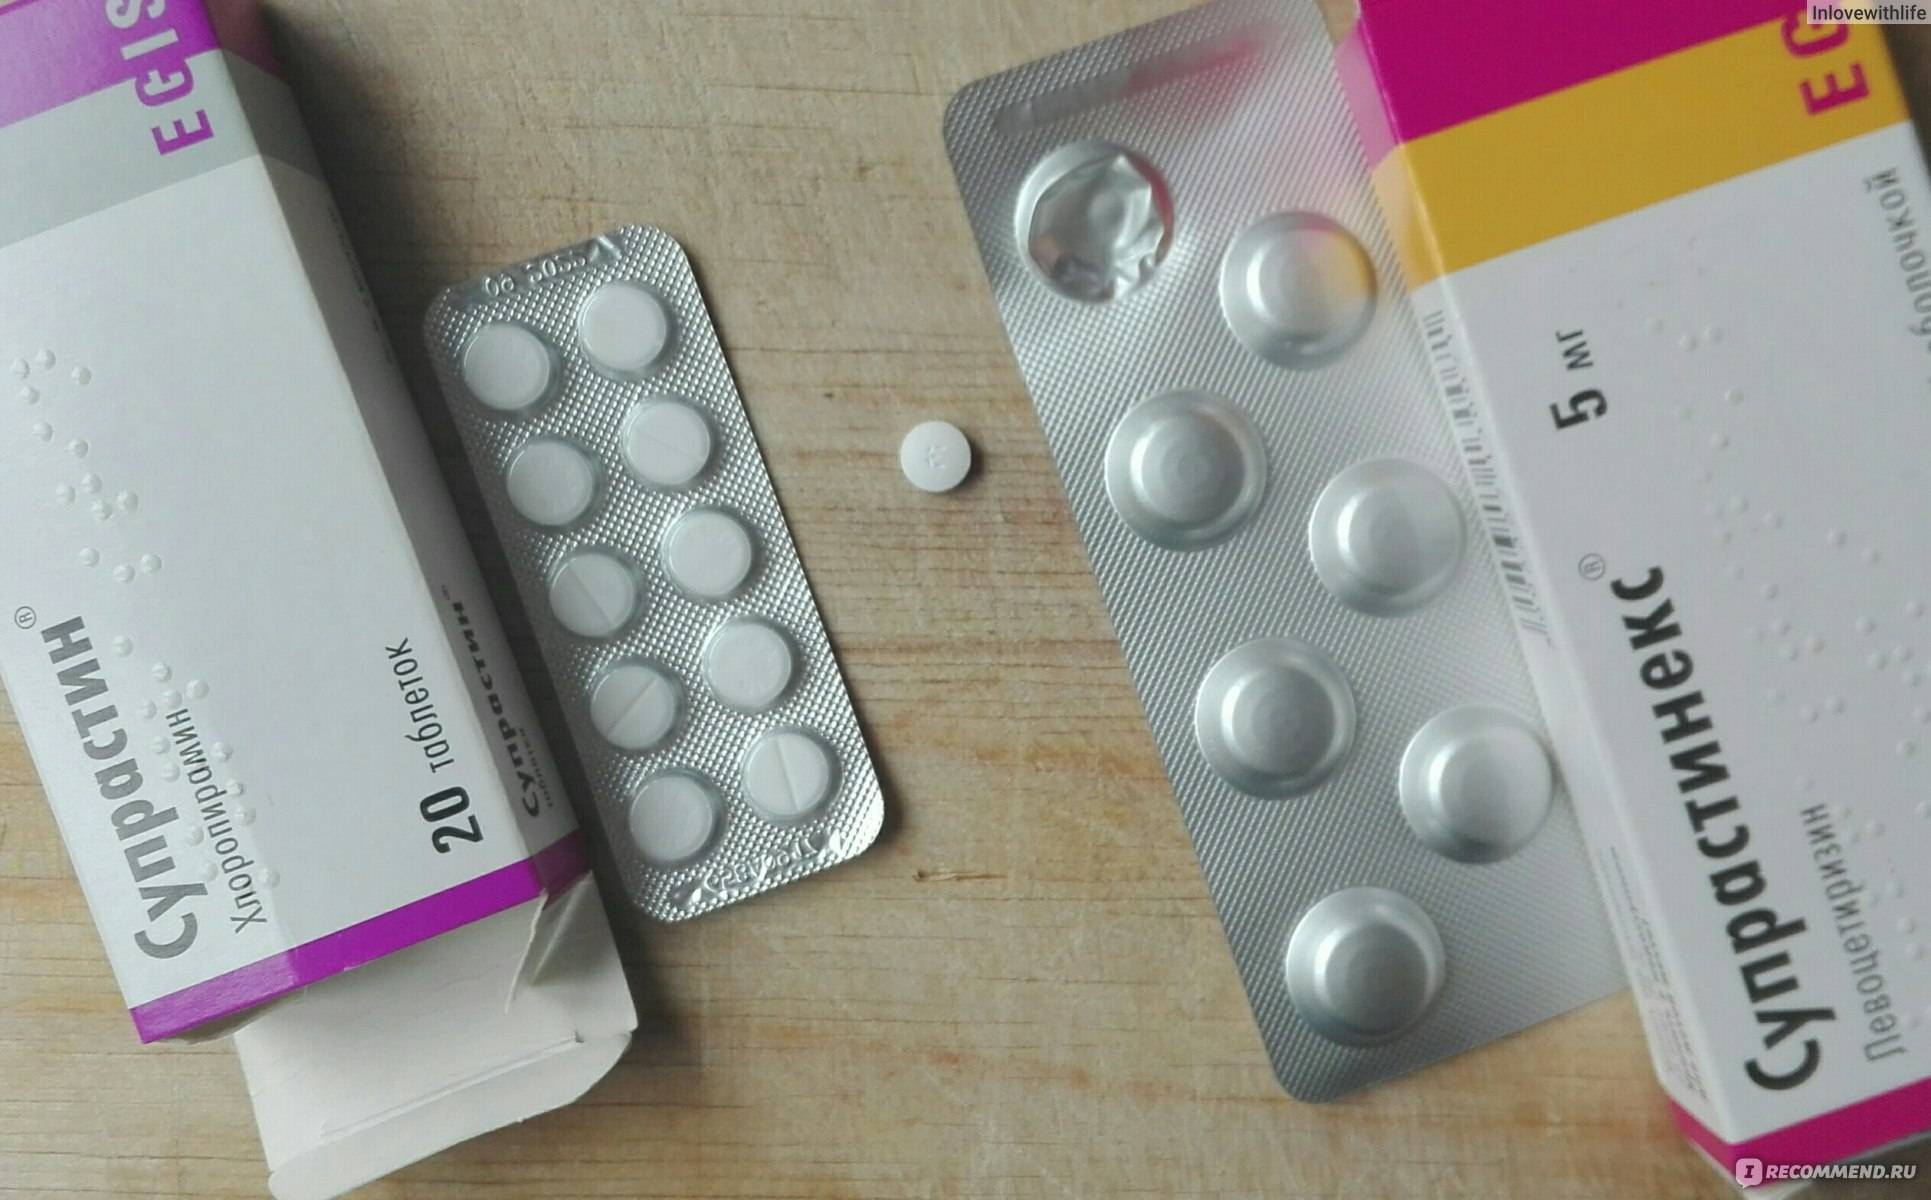 Супрастинекс в виде таблеток: инструкция по применению, цена и дозировка